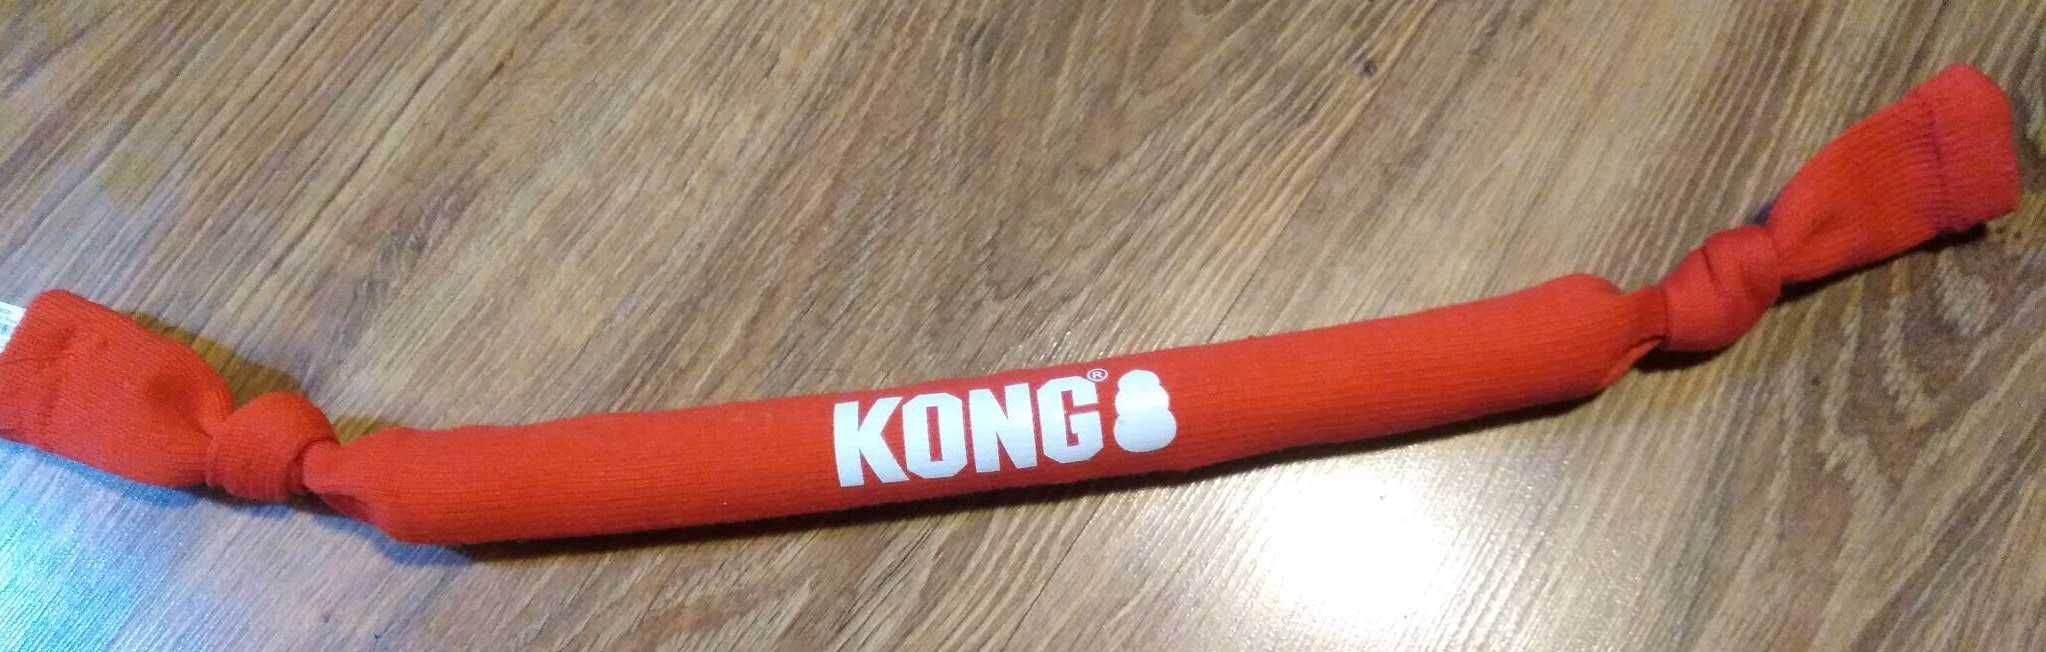 Kong zabawka dla psa